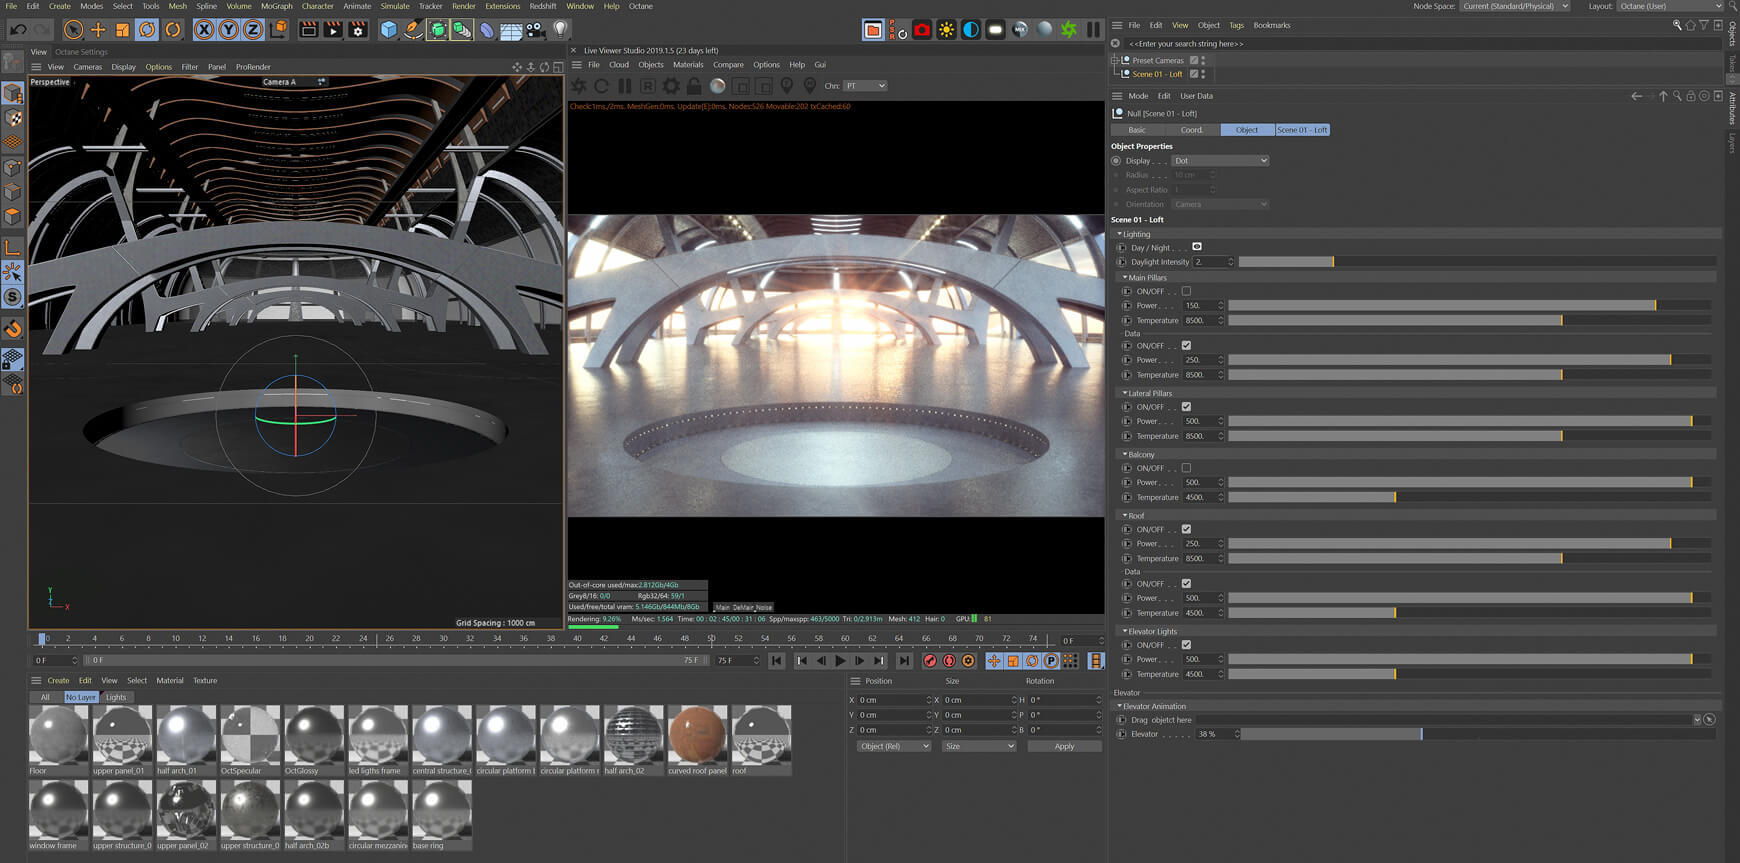 Cinema 4D Aura Professional 3D Environments for Cinema 4D